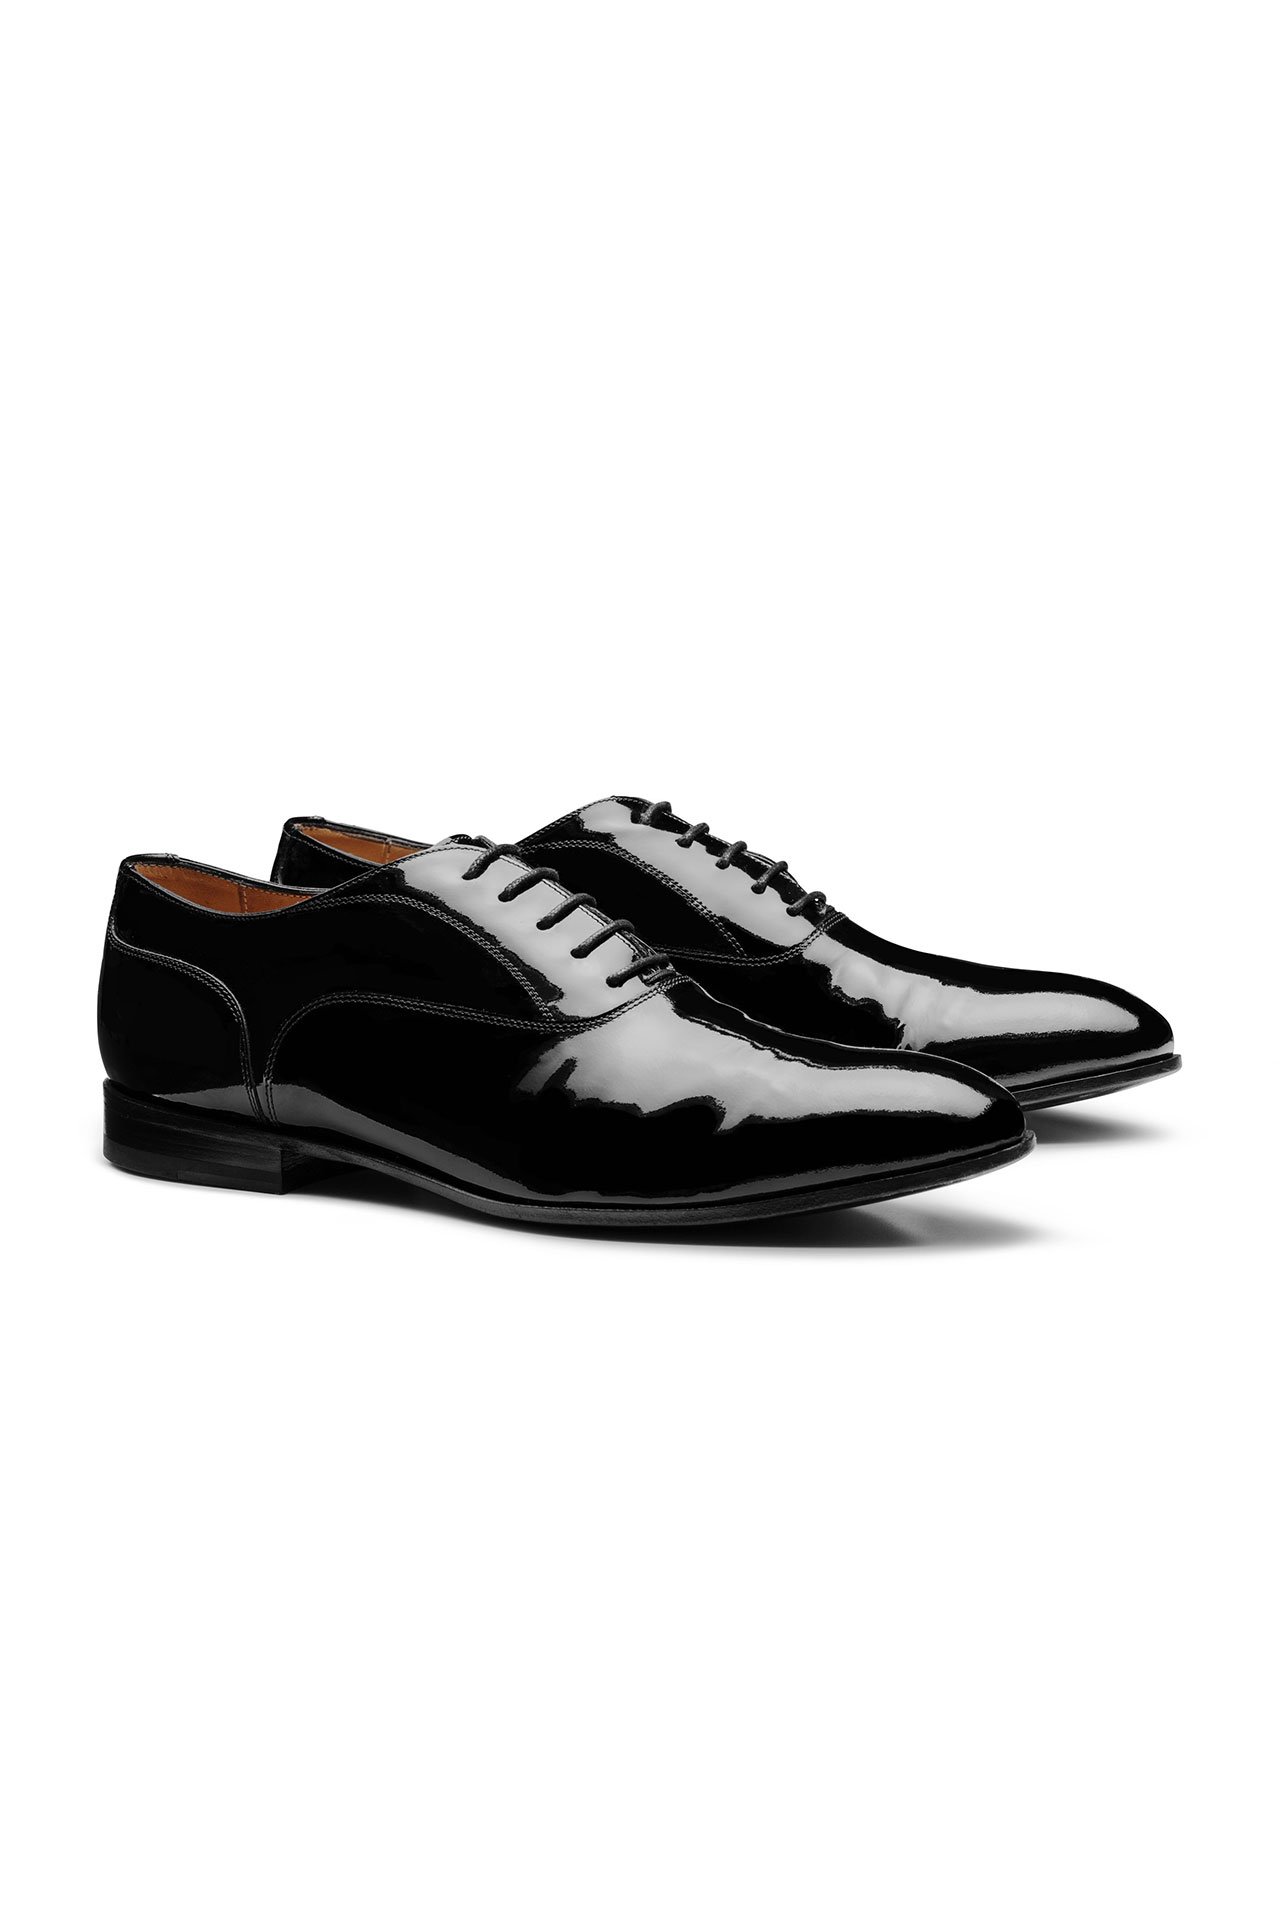 Black Patent Oxford Shoes – Walk Tall